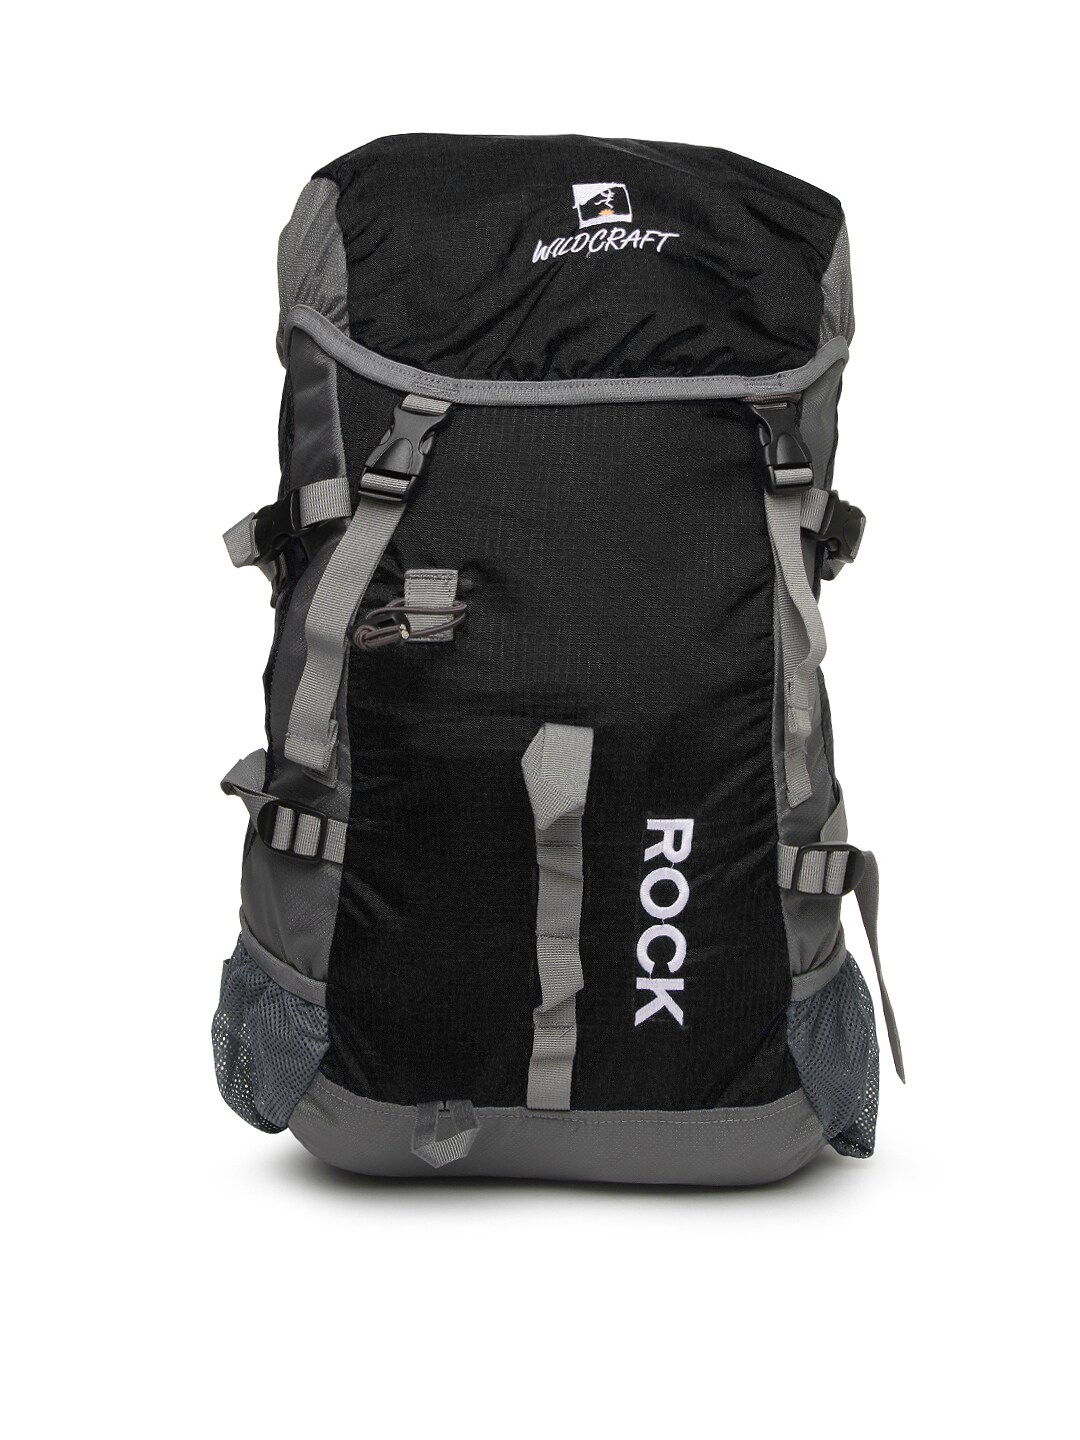 Wildcraft Unisex Black Rock Backpack